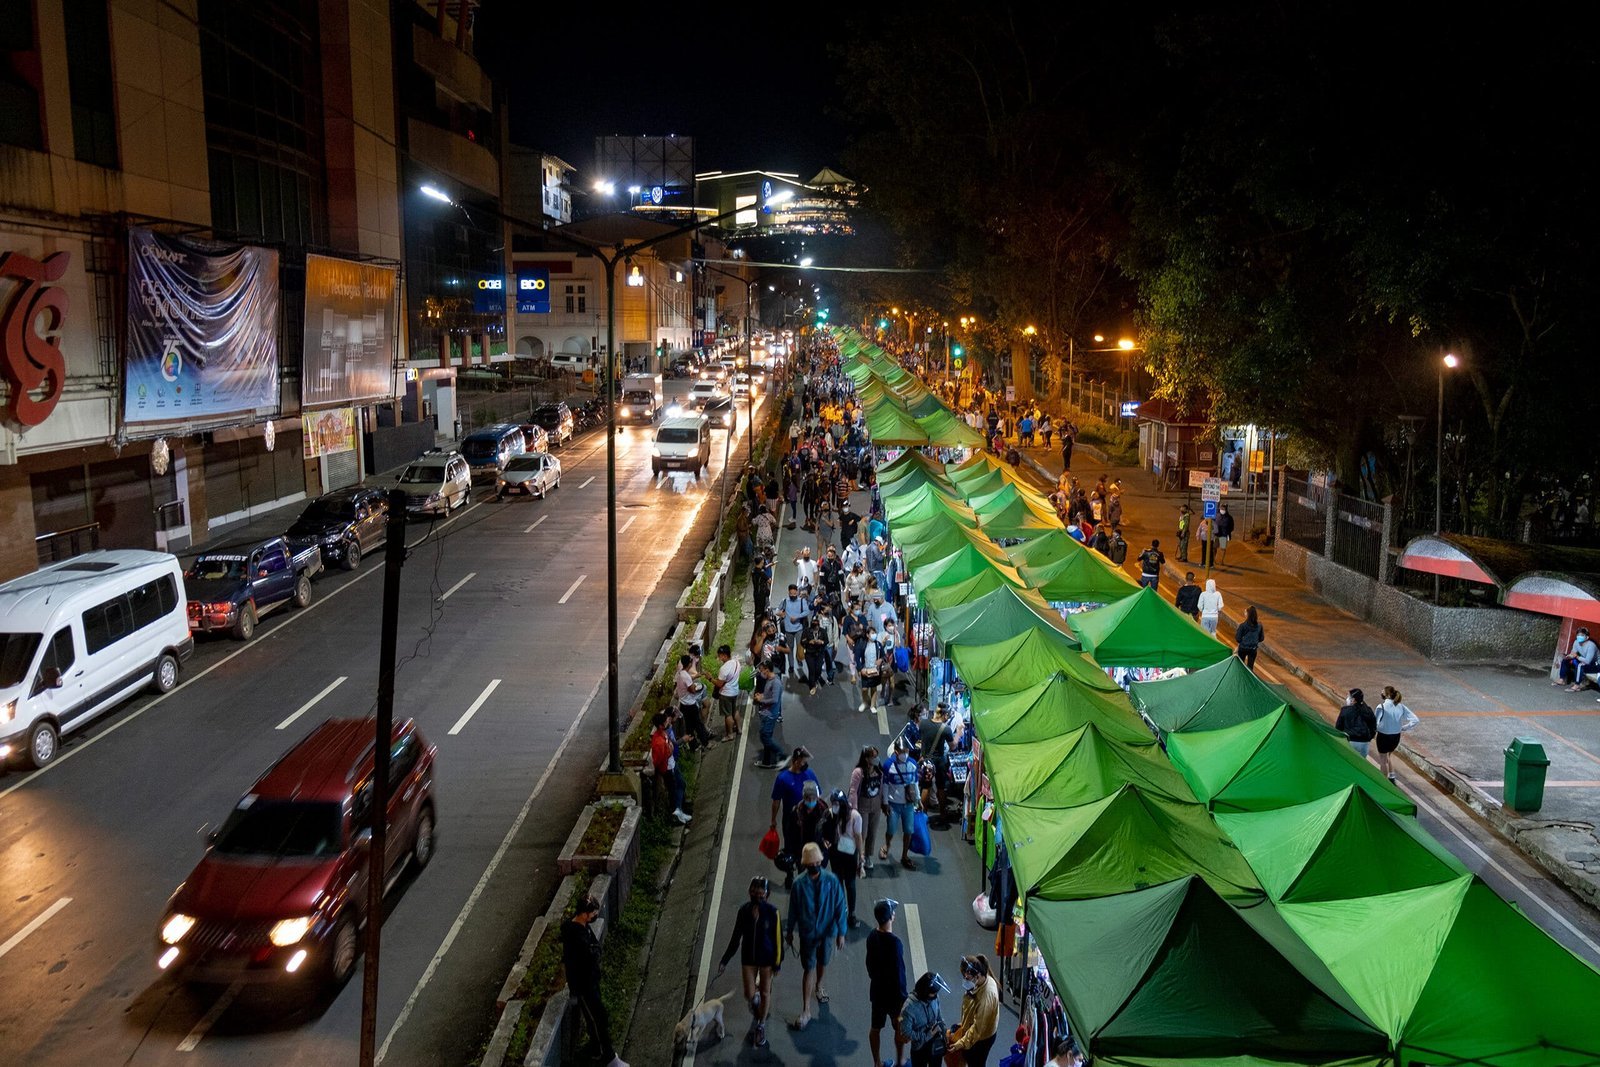 Photo of Baguio Night Market taken on November 28, 2021